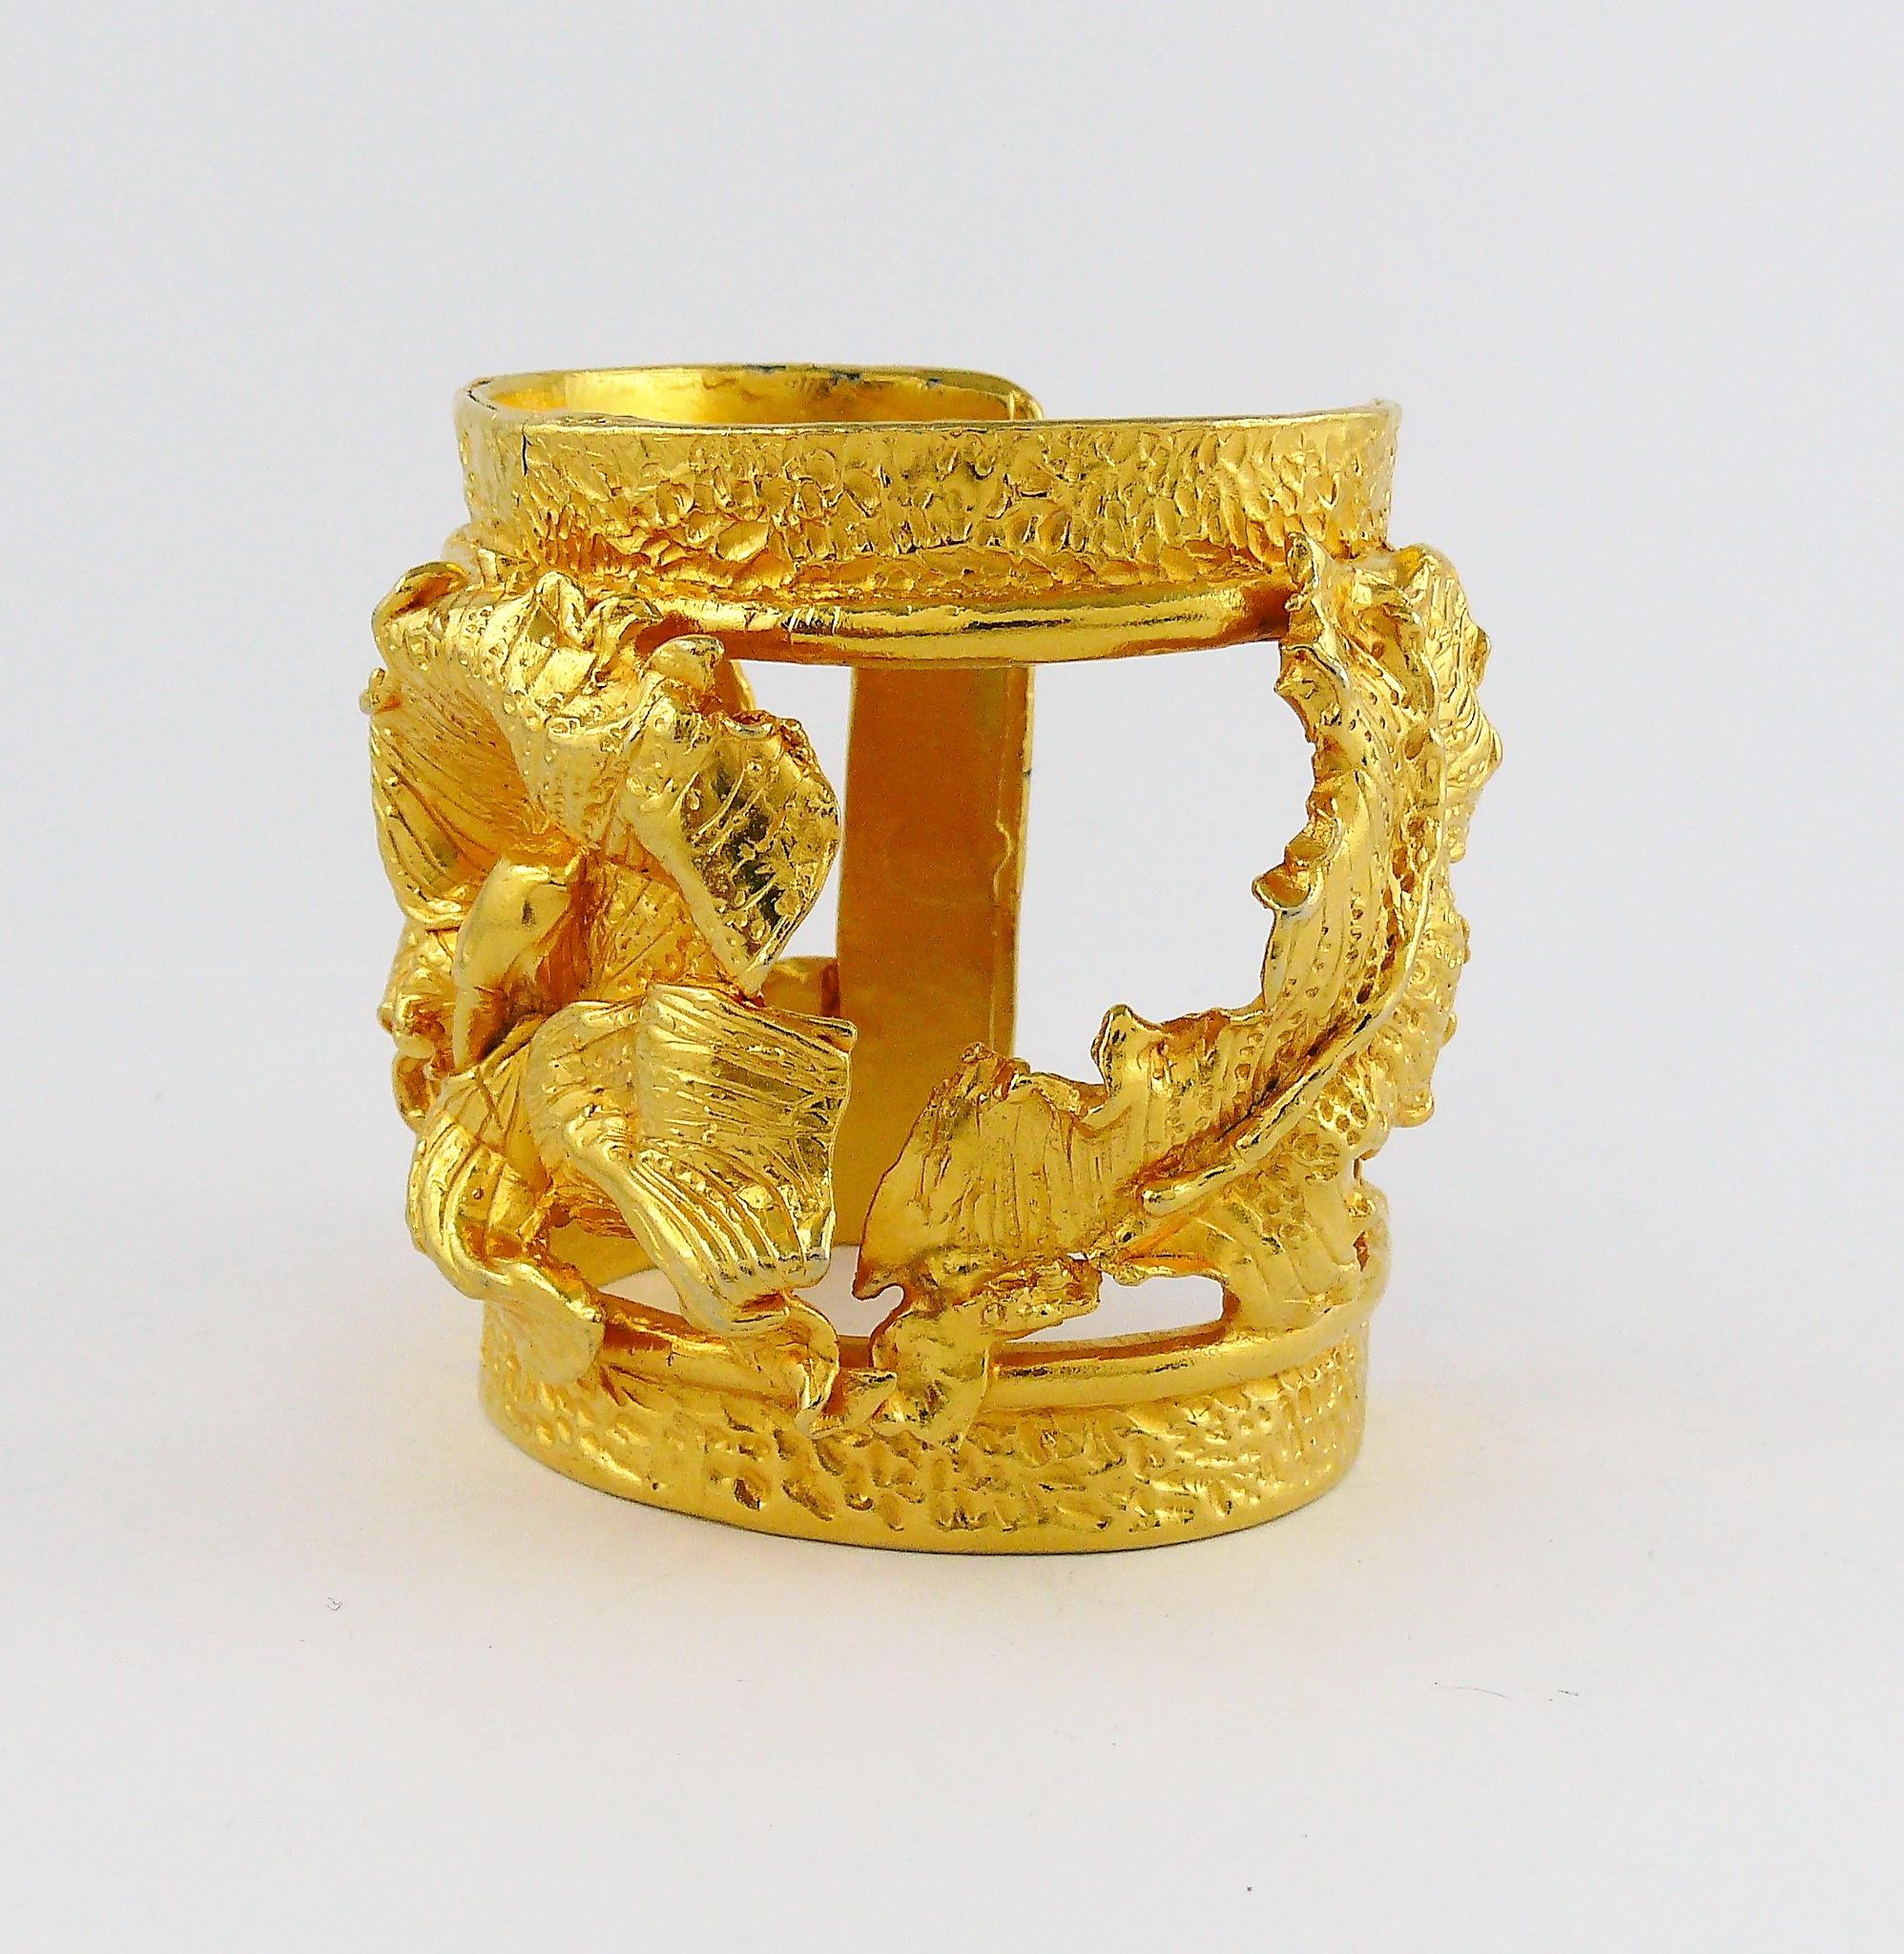 Leonard Paris Vintage Gold Toned Openwork Orchid Cuff Bracelet 2